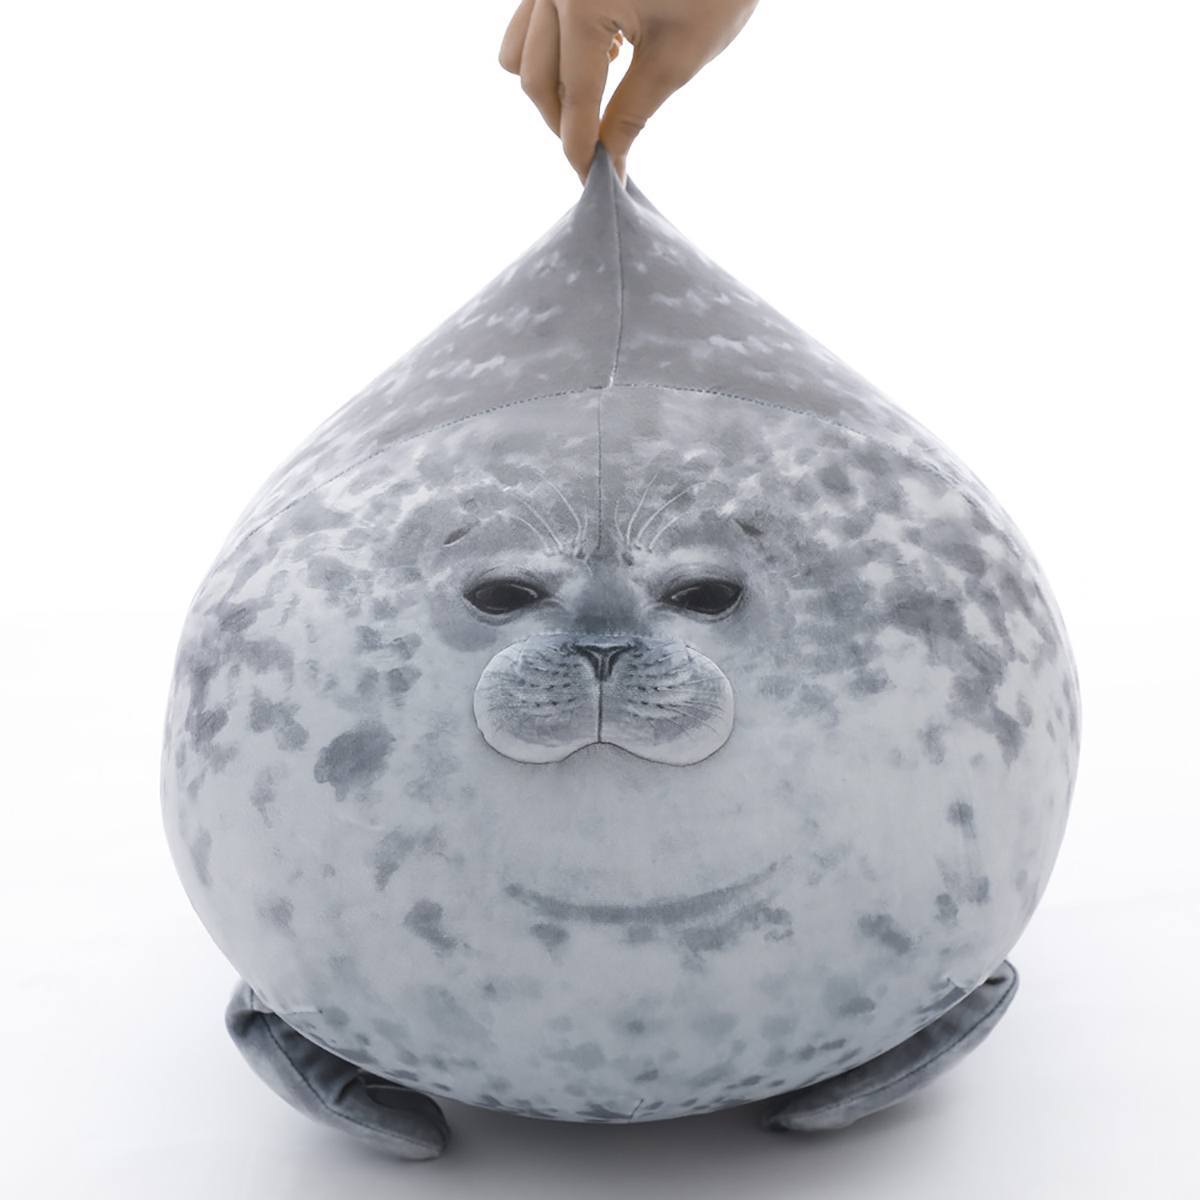 Chubby Angry Seal Pillow Plush 3D Stuffed Animal (2 Colors)